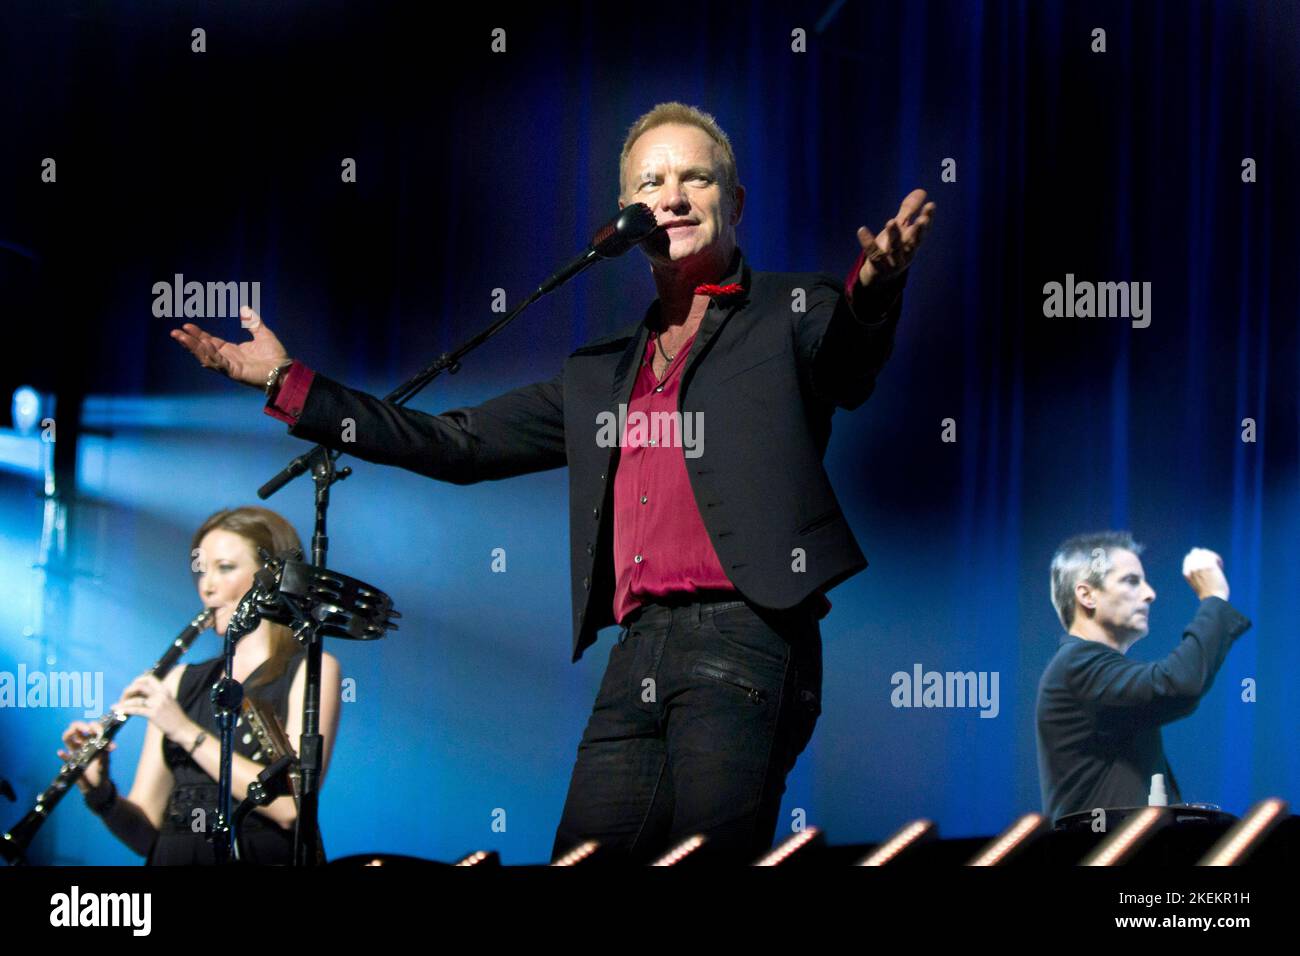 Sting in concerto a Het Gelredome Arnhem Holland alla Symphonica in Rosso. 2010. vvvbvanbree fotografie. Foto Stock